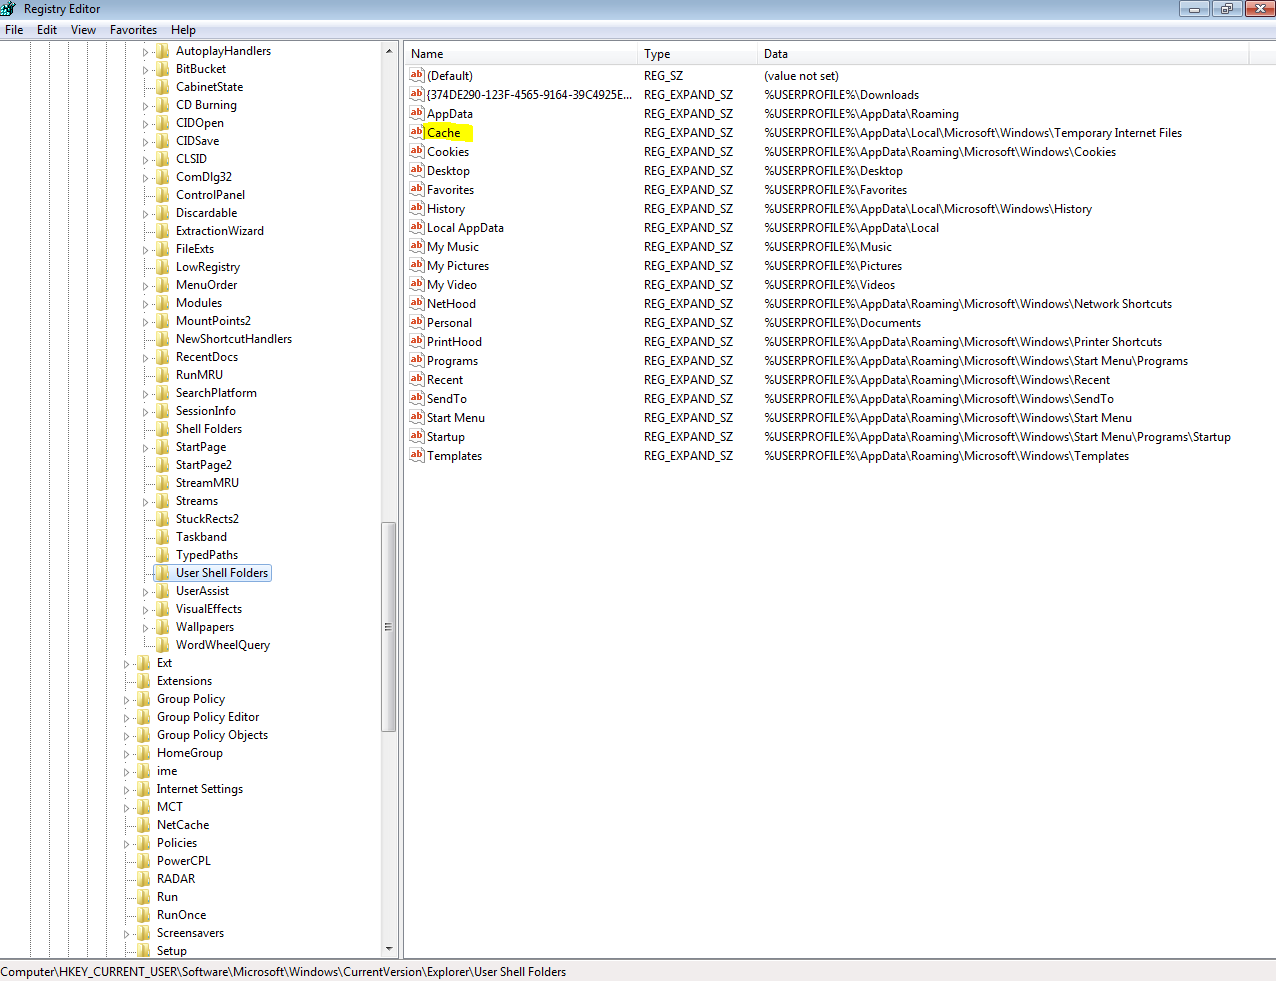 User Shell Folders Reg expand sz